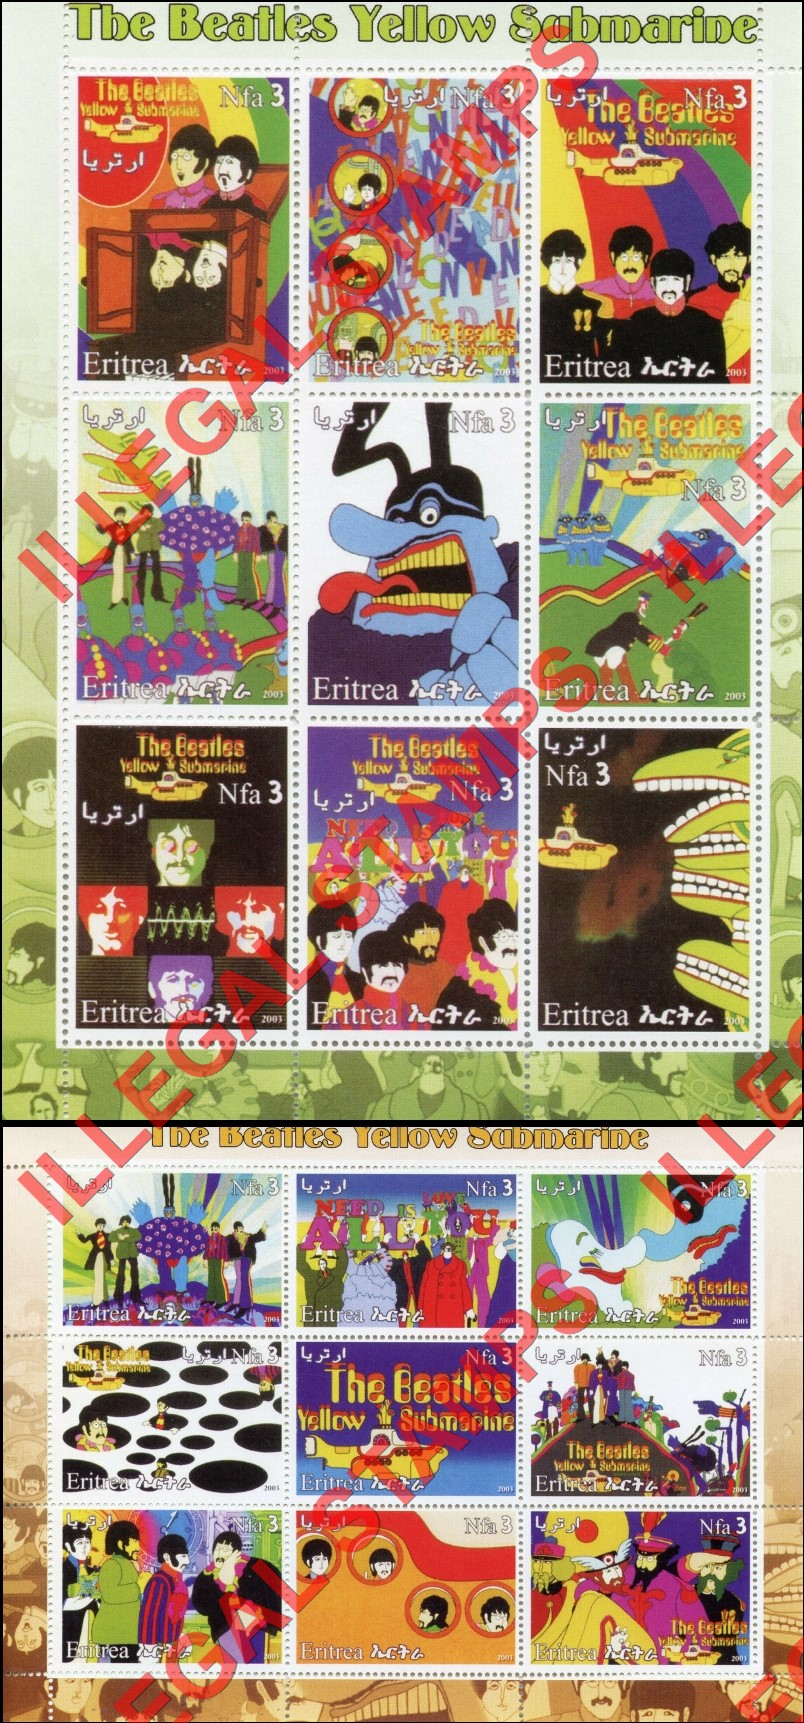 Eritrea 2003 The Beatles Yellow Submarine Counterfeit Illegal Stamp Souvenir Sheets of 9